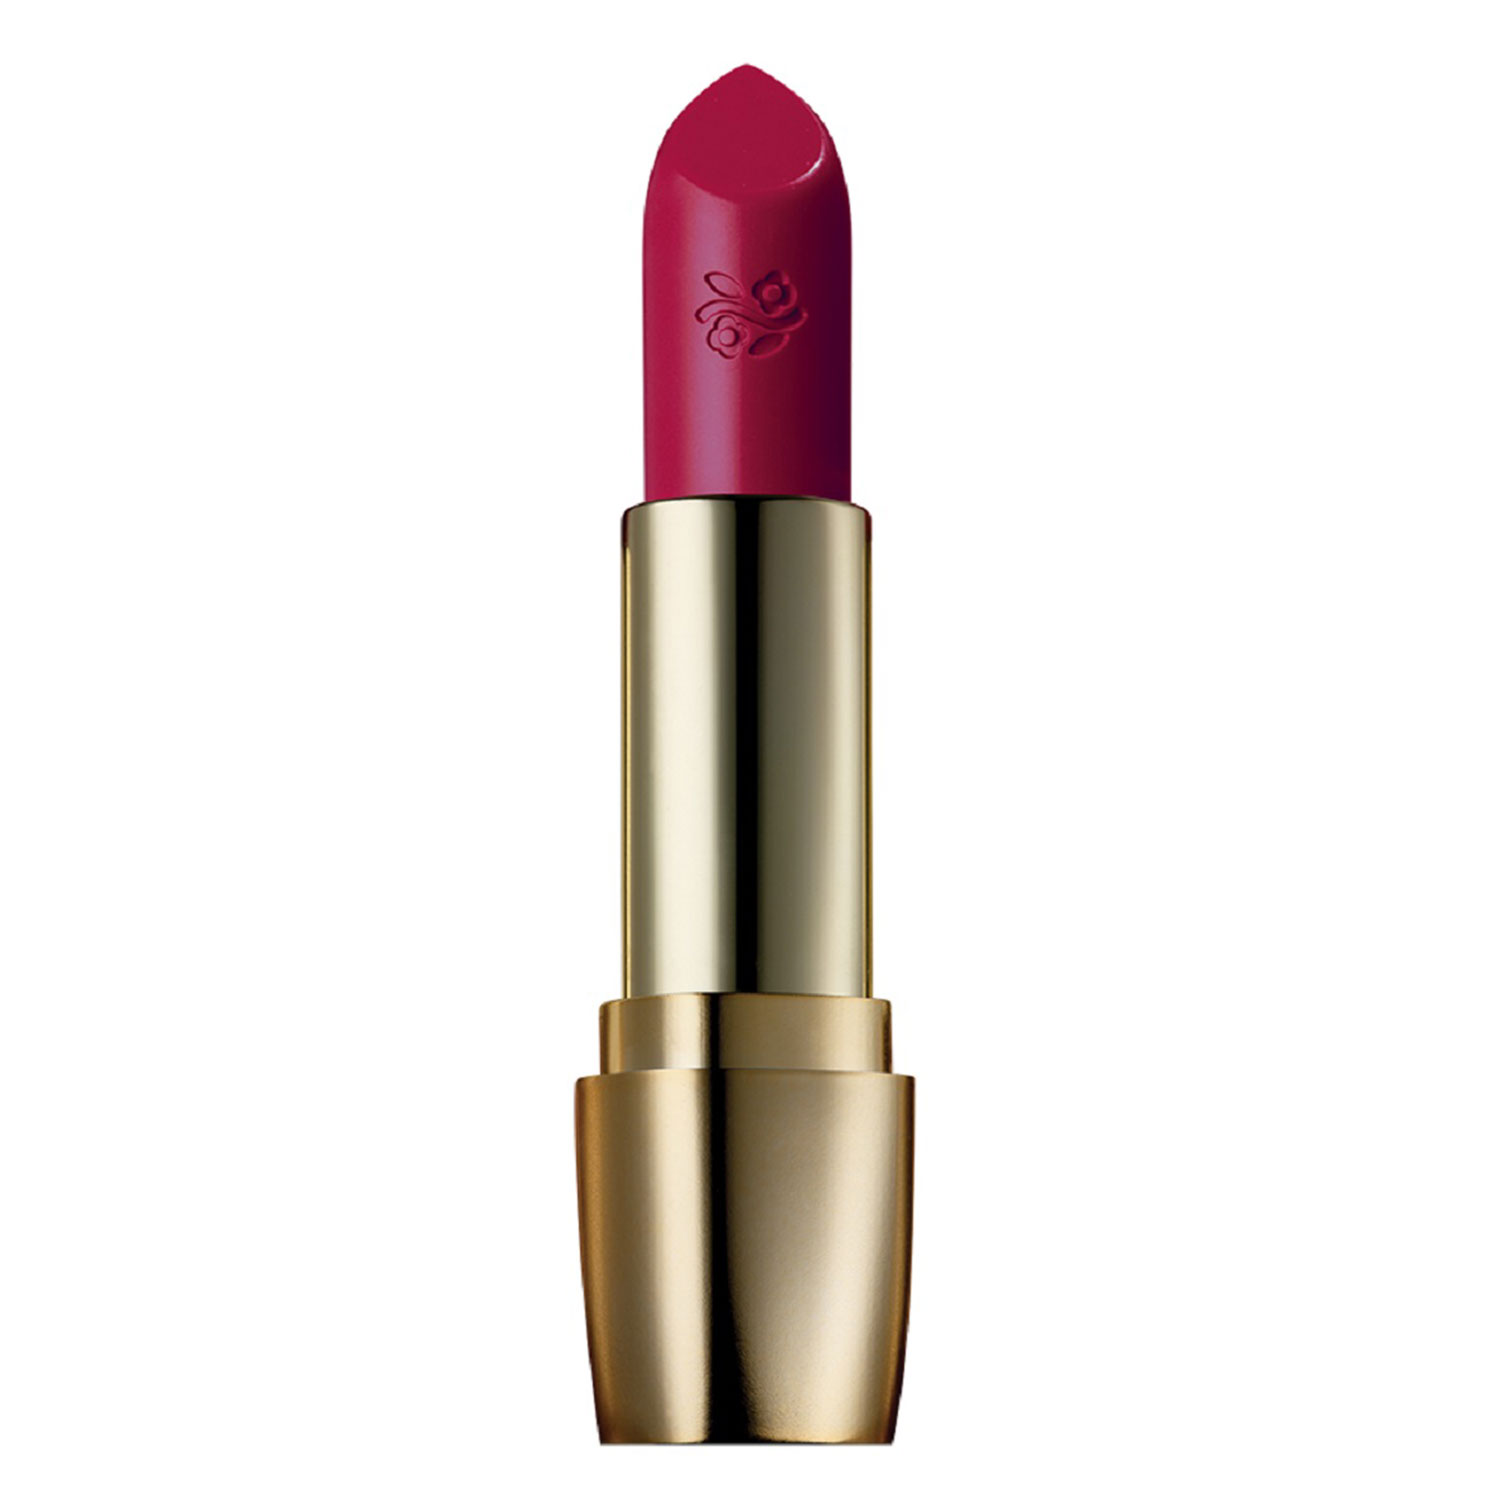 Deborah Milano Milano Red Lipstick, 4.4gm-32 Deep Fuxia